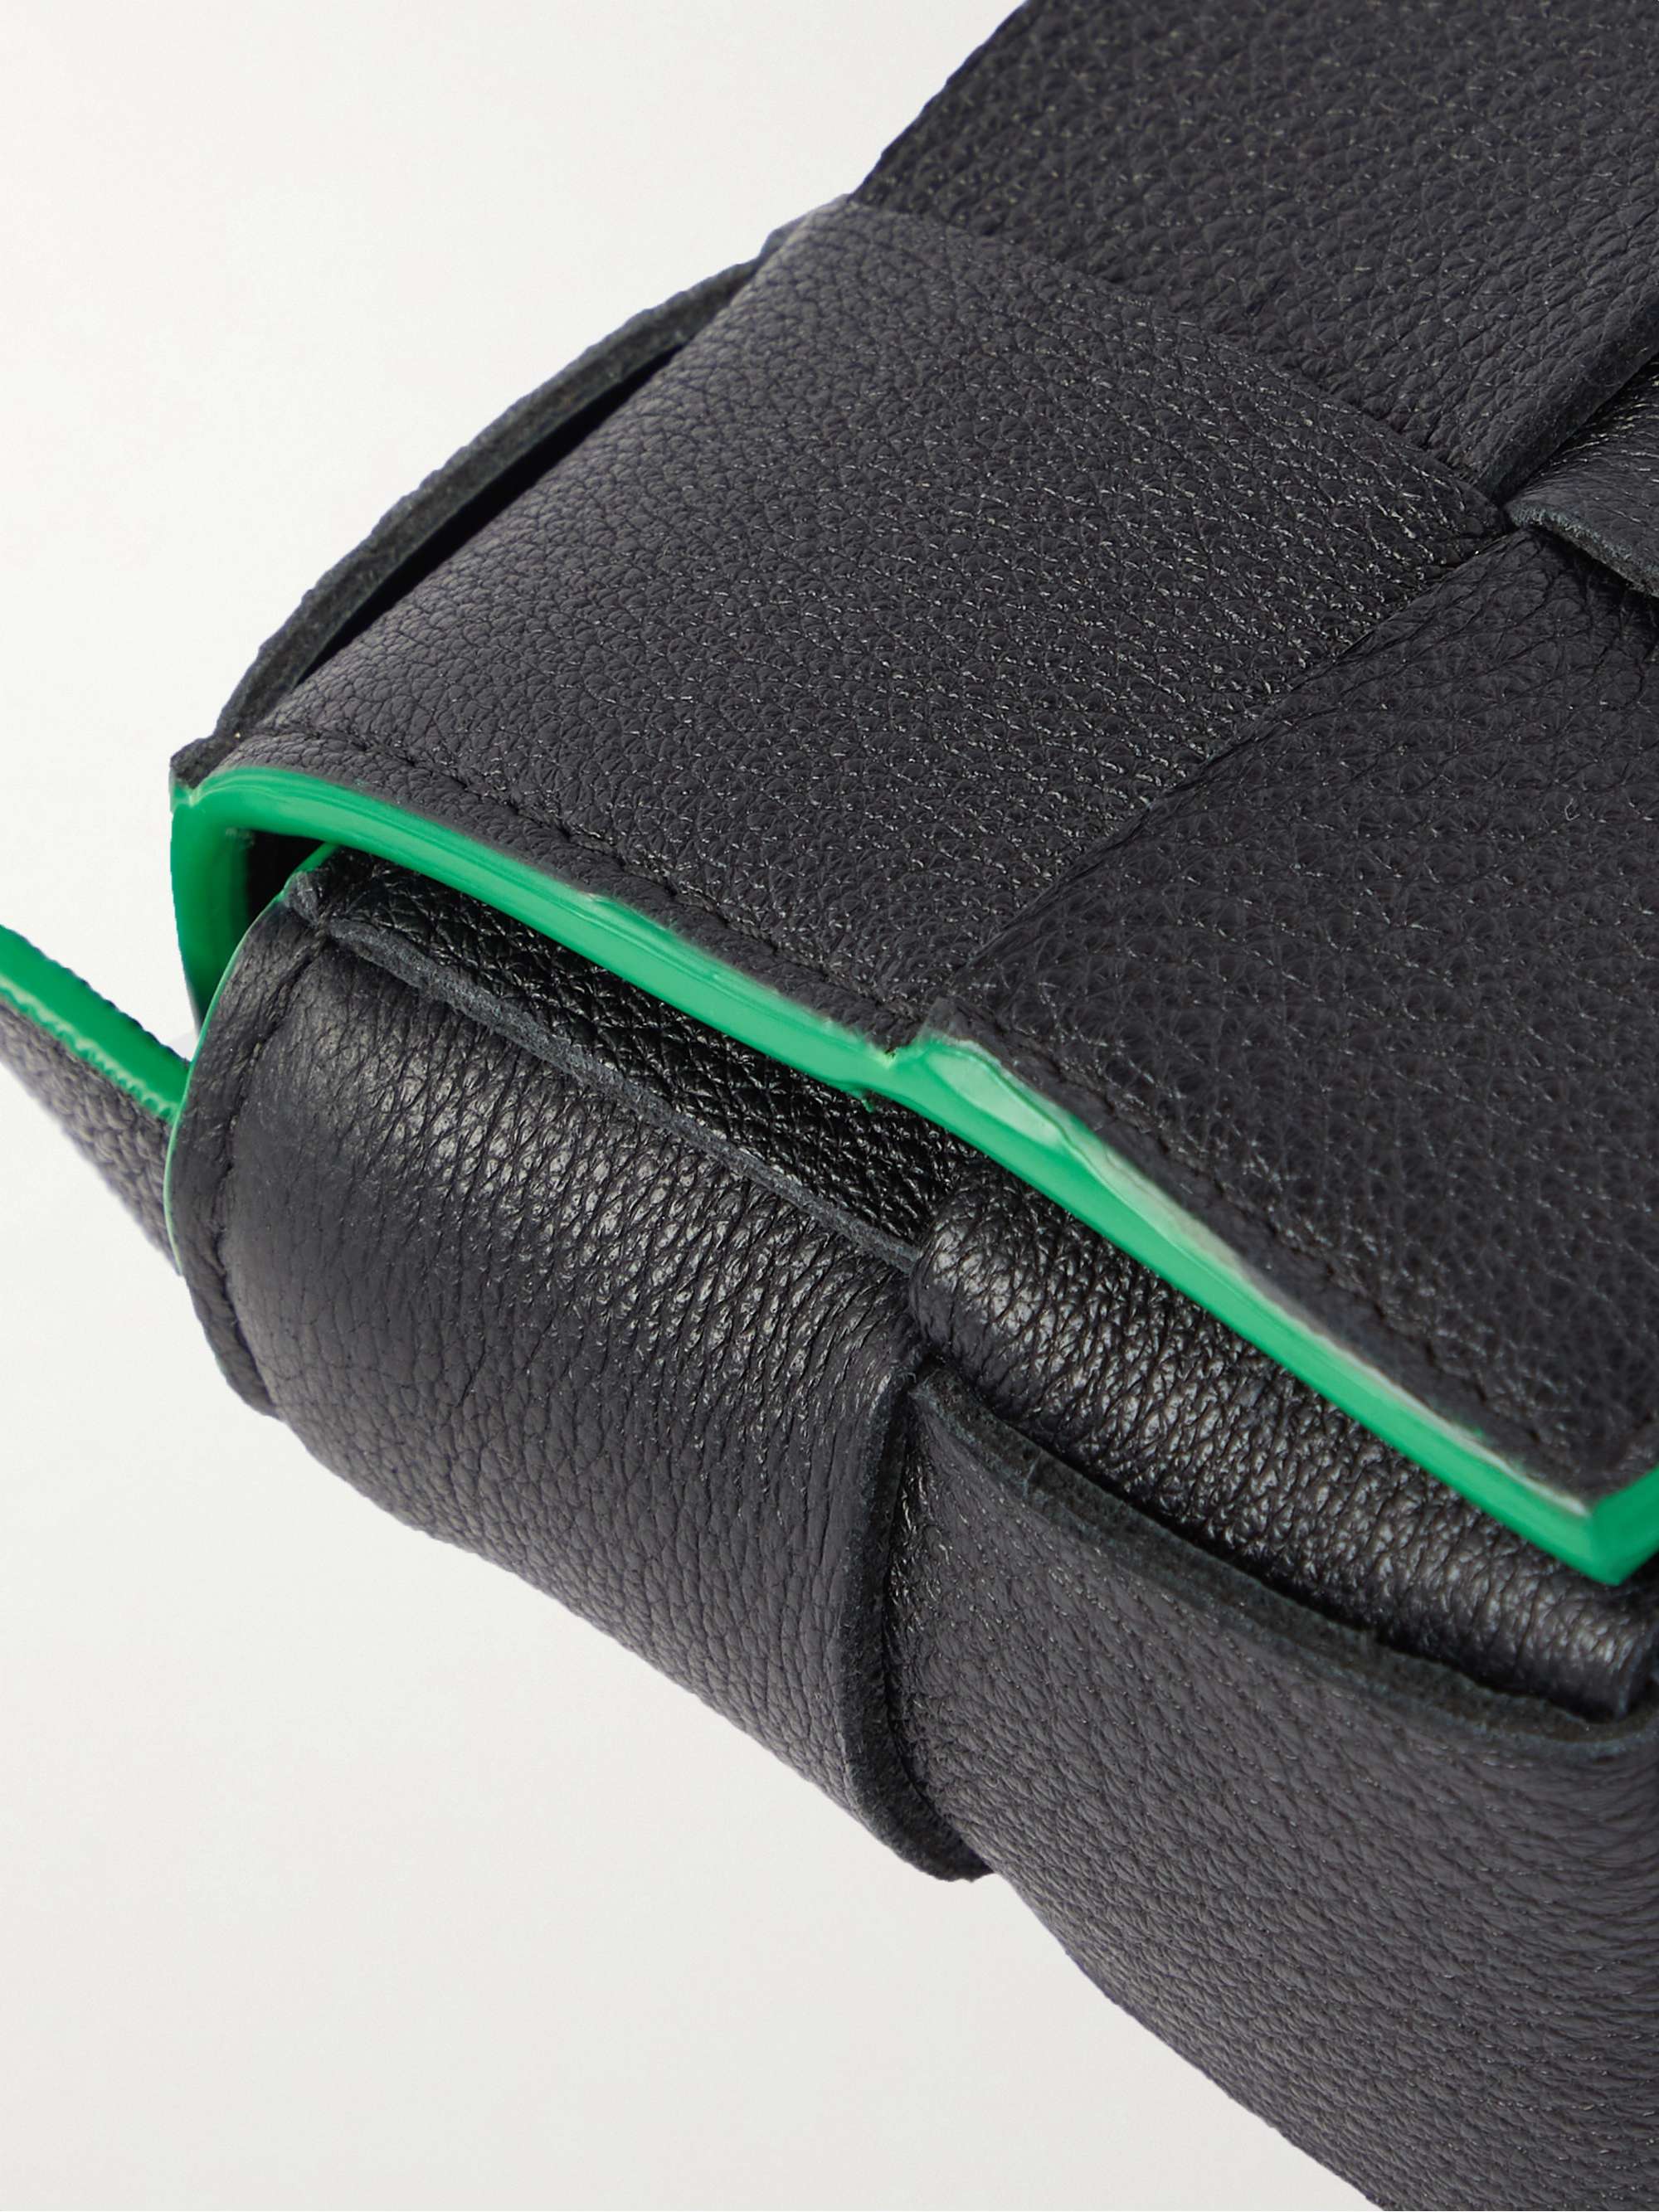 Bottega Veneta Intrecciato Leather Messenger Bag In Green